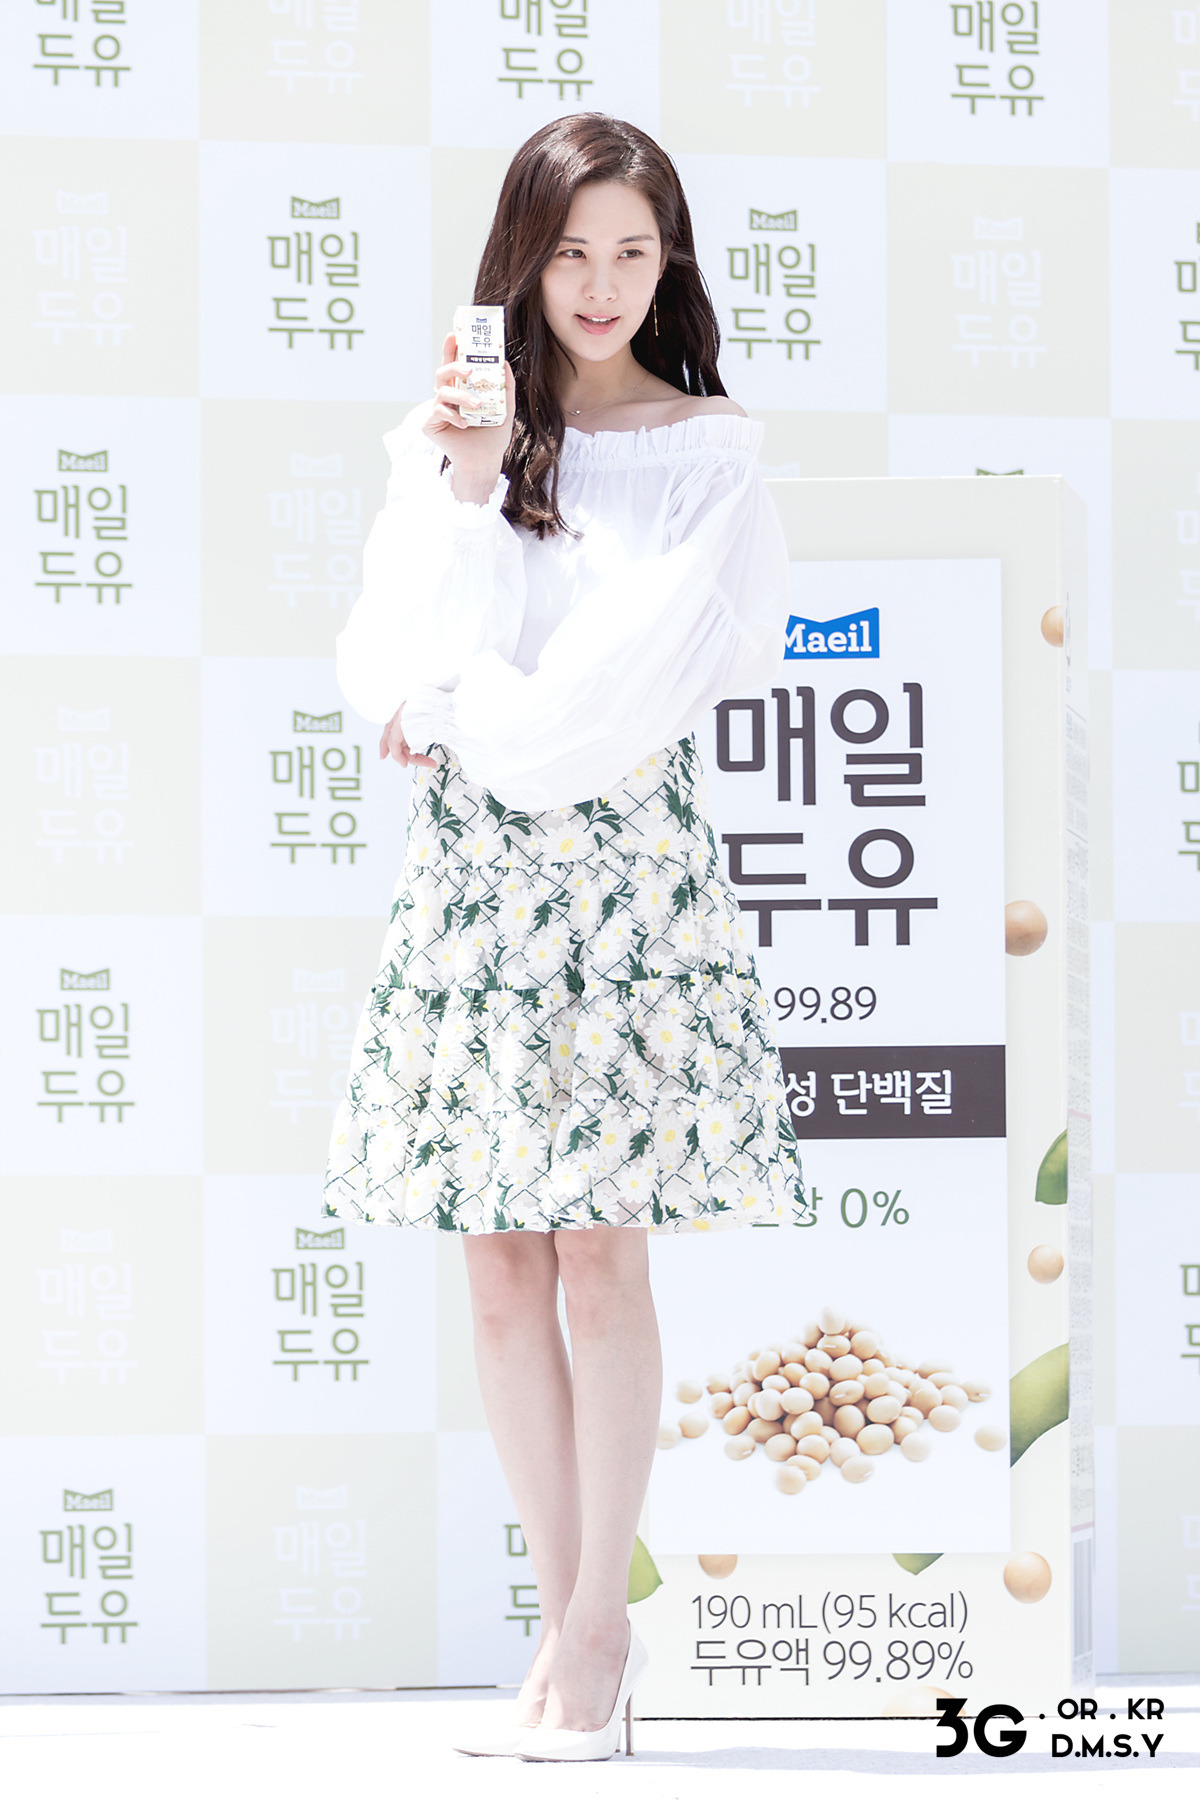  [PIC][03-06-2017]SeoHyun tham dự sự kiện “City Forestival - Maeil Duyou 'Confidence Diary'” vào chiều nay - Page 3 214C1D3F593E8EFF1A46CB